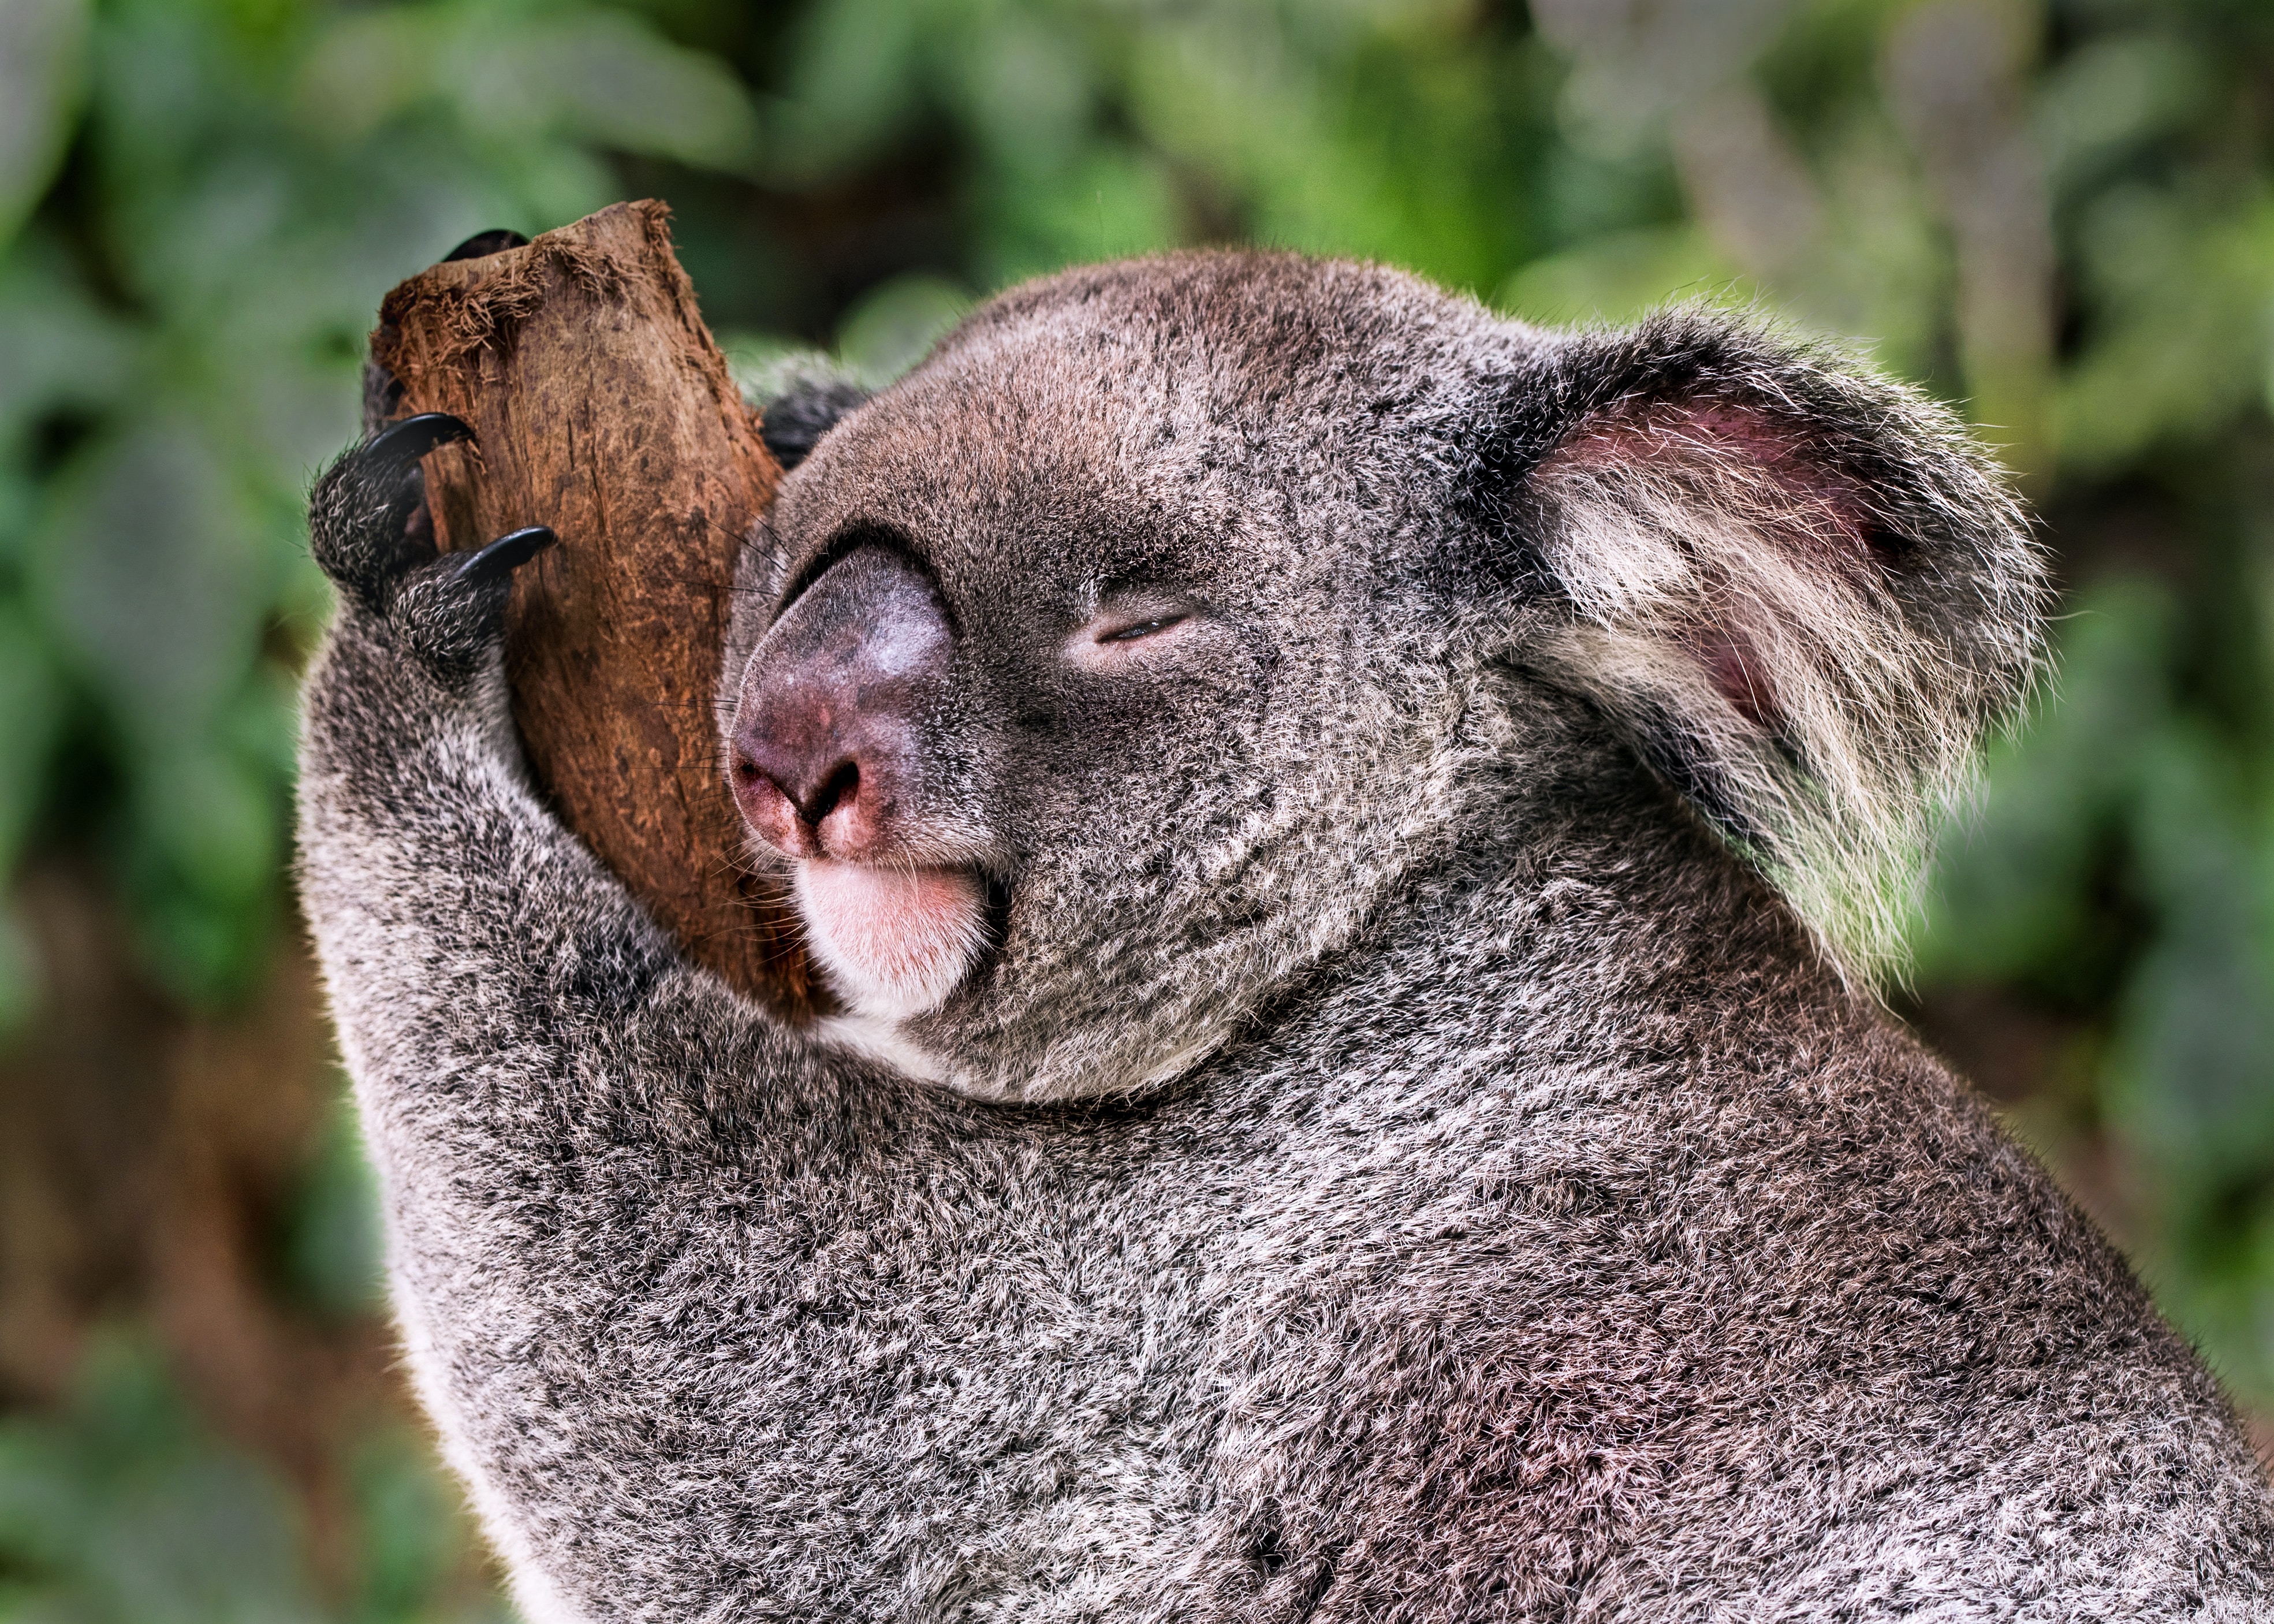 Koala in Australia - happiest countries